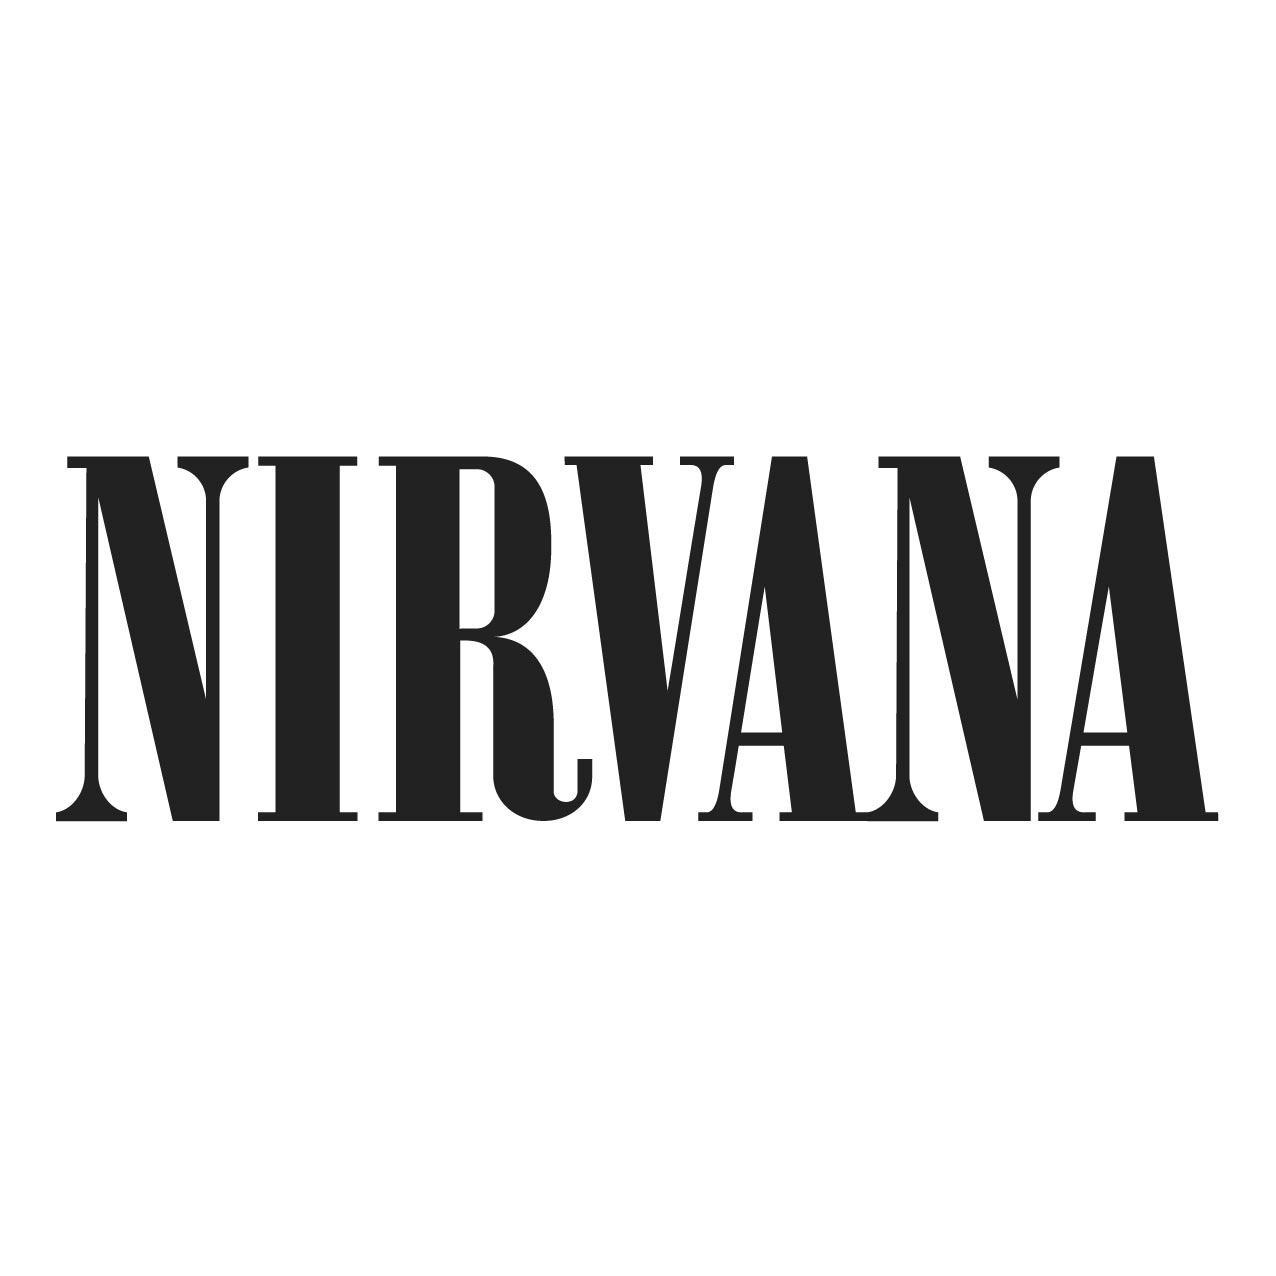 Image For > Nirvana Logo Tumblr